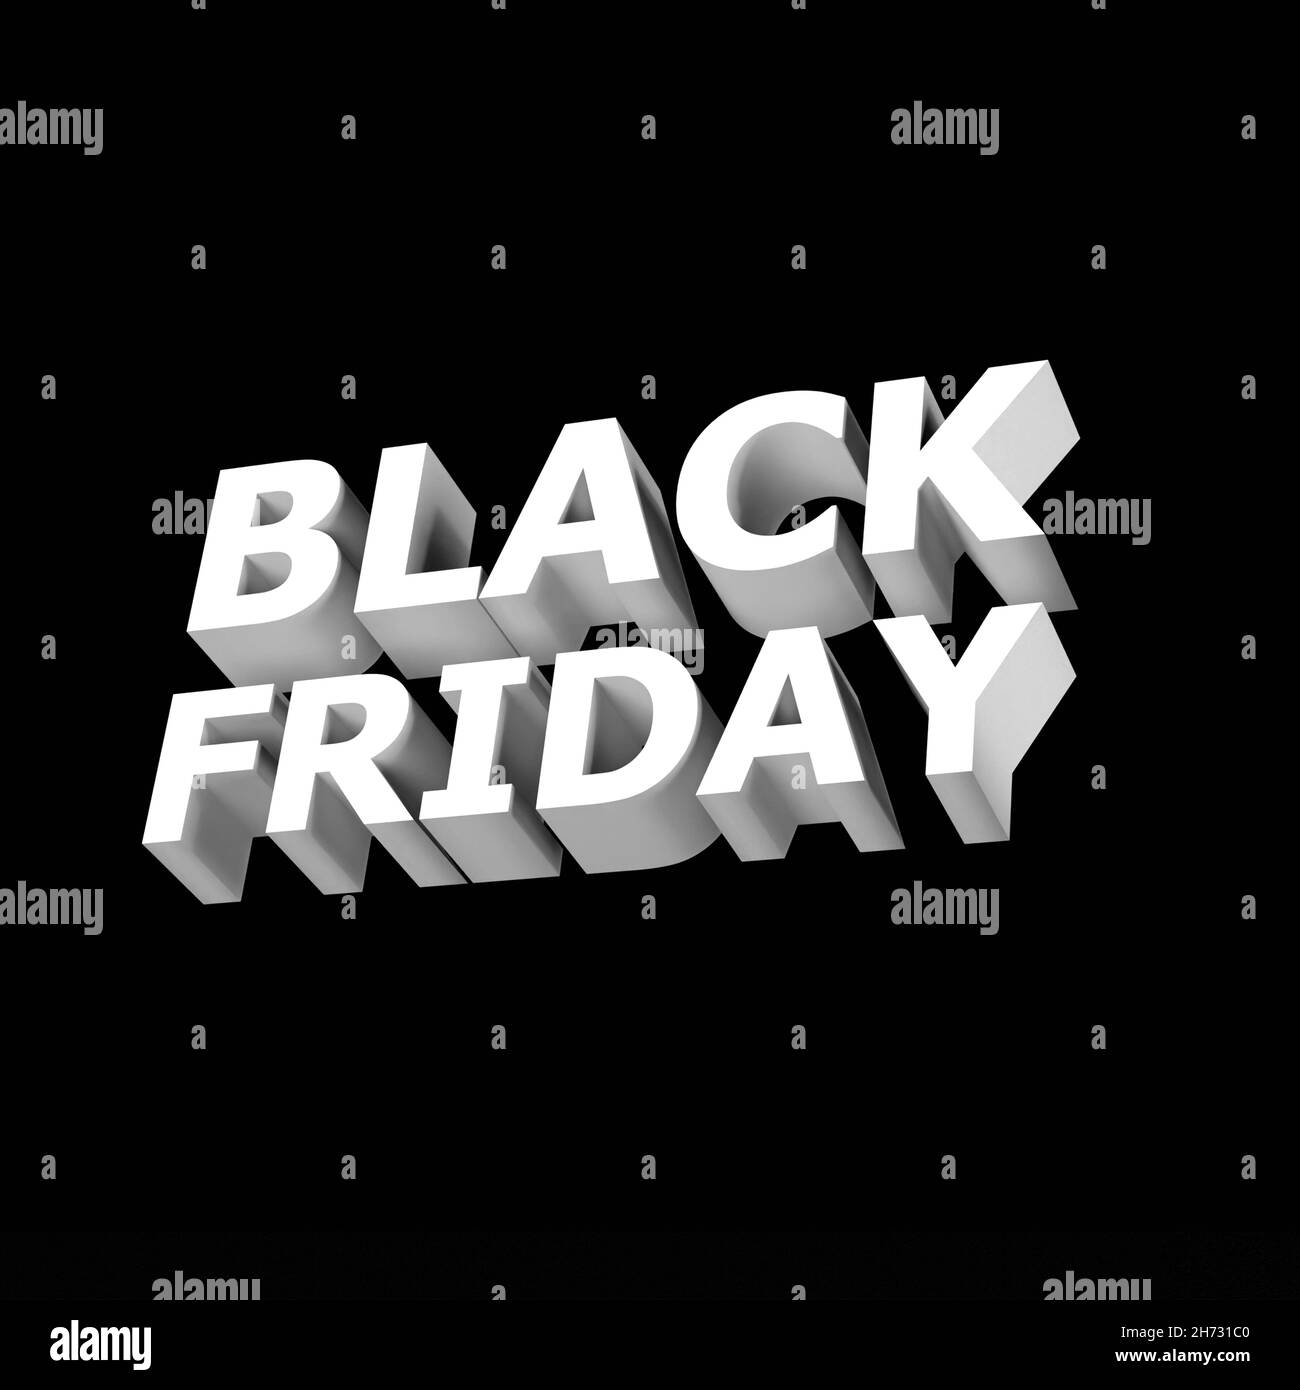 Black Friday text in 3d render illustration on black background Stock Photo